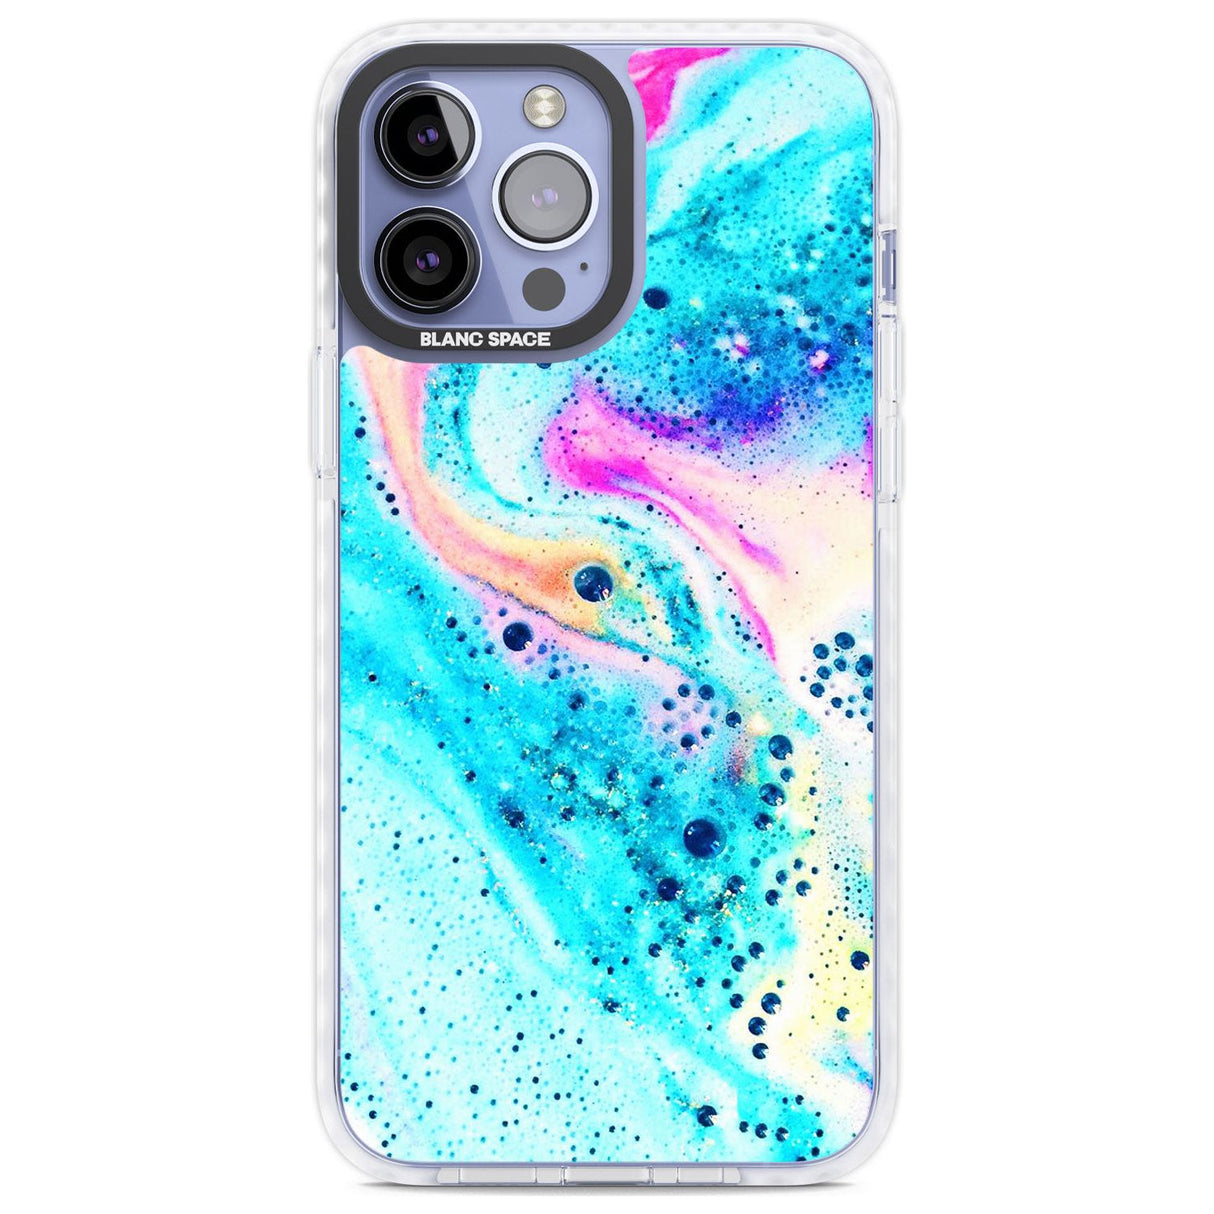 Ocean White Bath Bomb Phone Case iPhone 13 Pro Max / Impact Case,iPhone 14 Pro Max / Impact Case Blanc Space